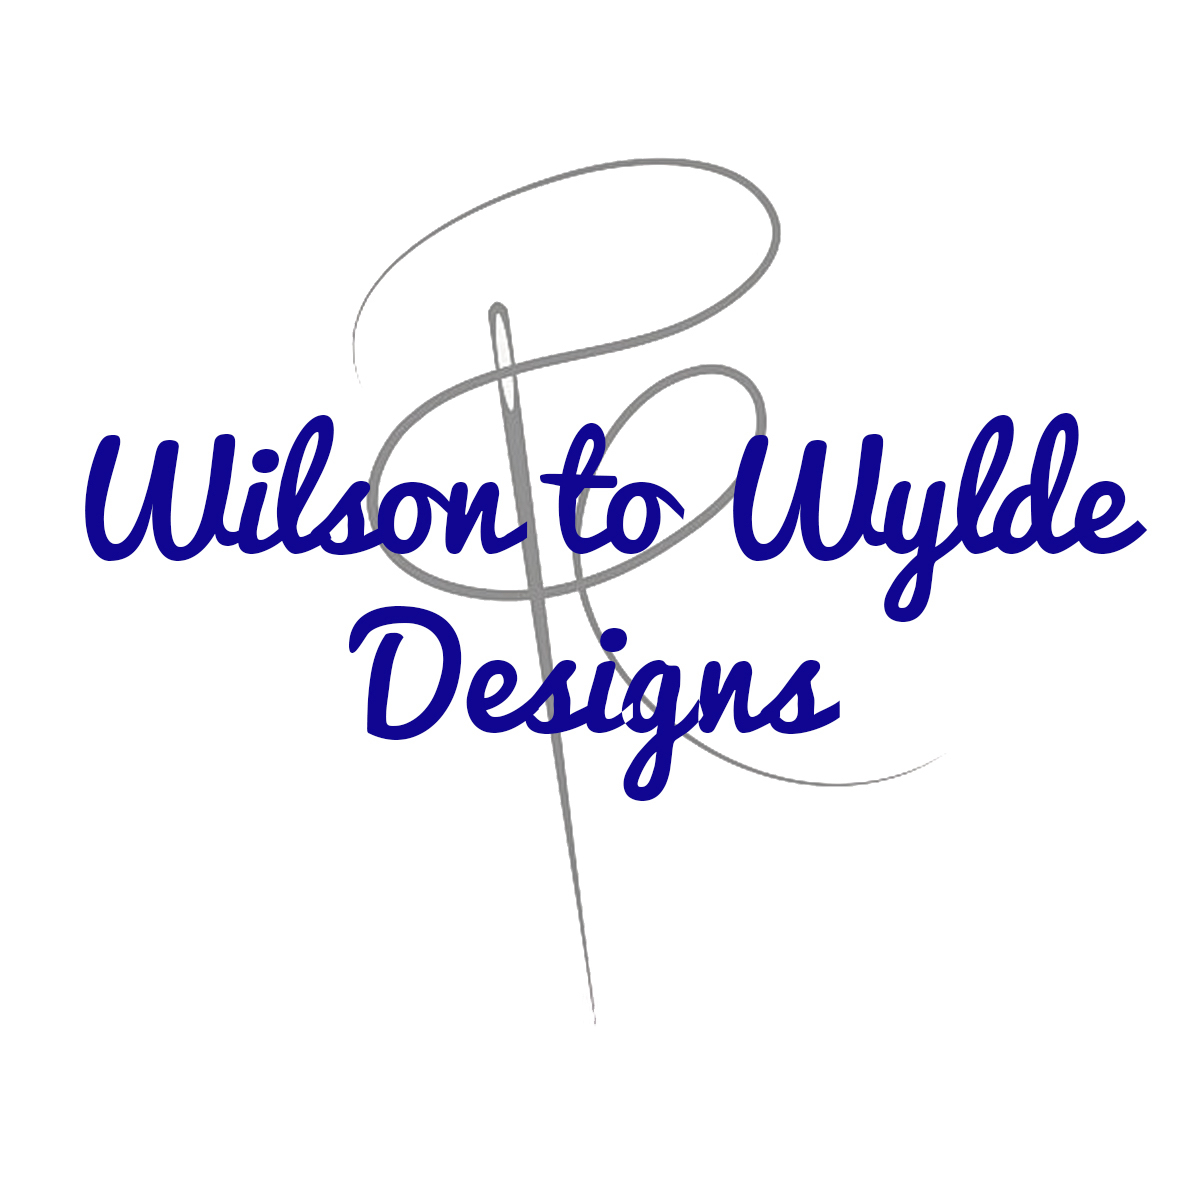 Wilson to Wylde Designs